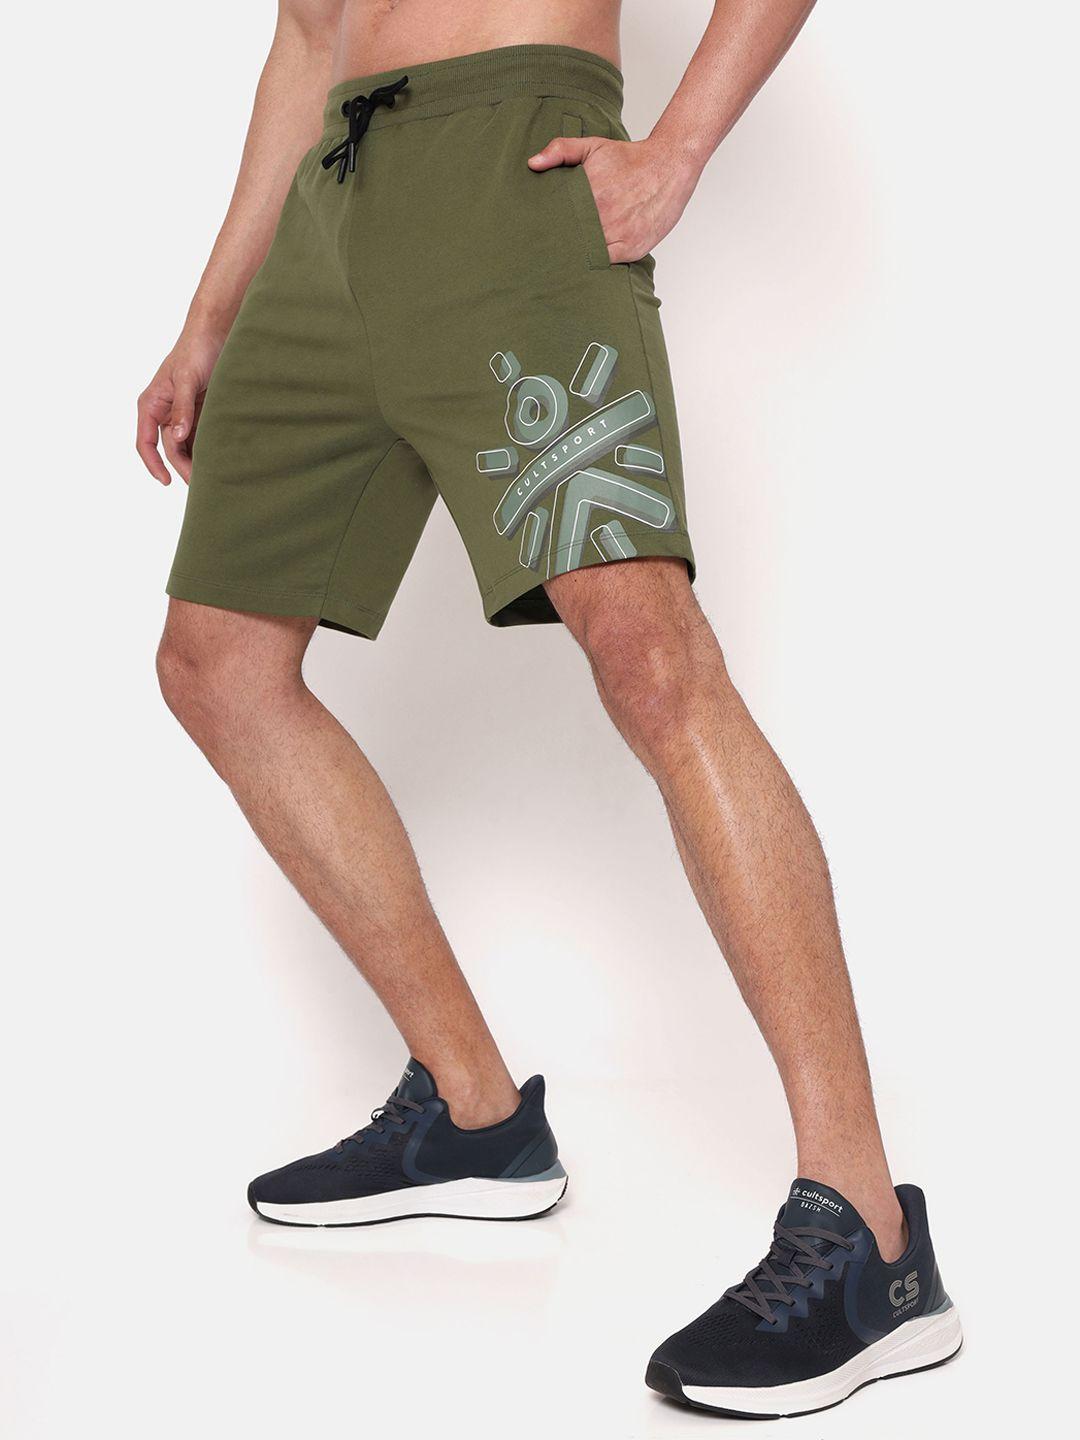 cultsport men olive green cotton running shorts